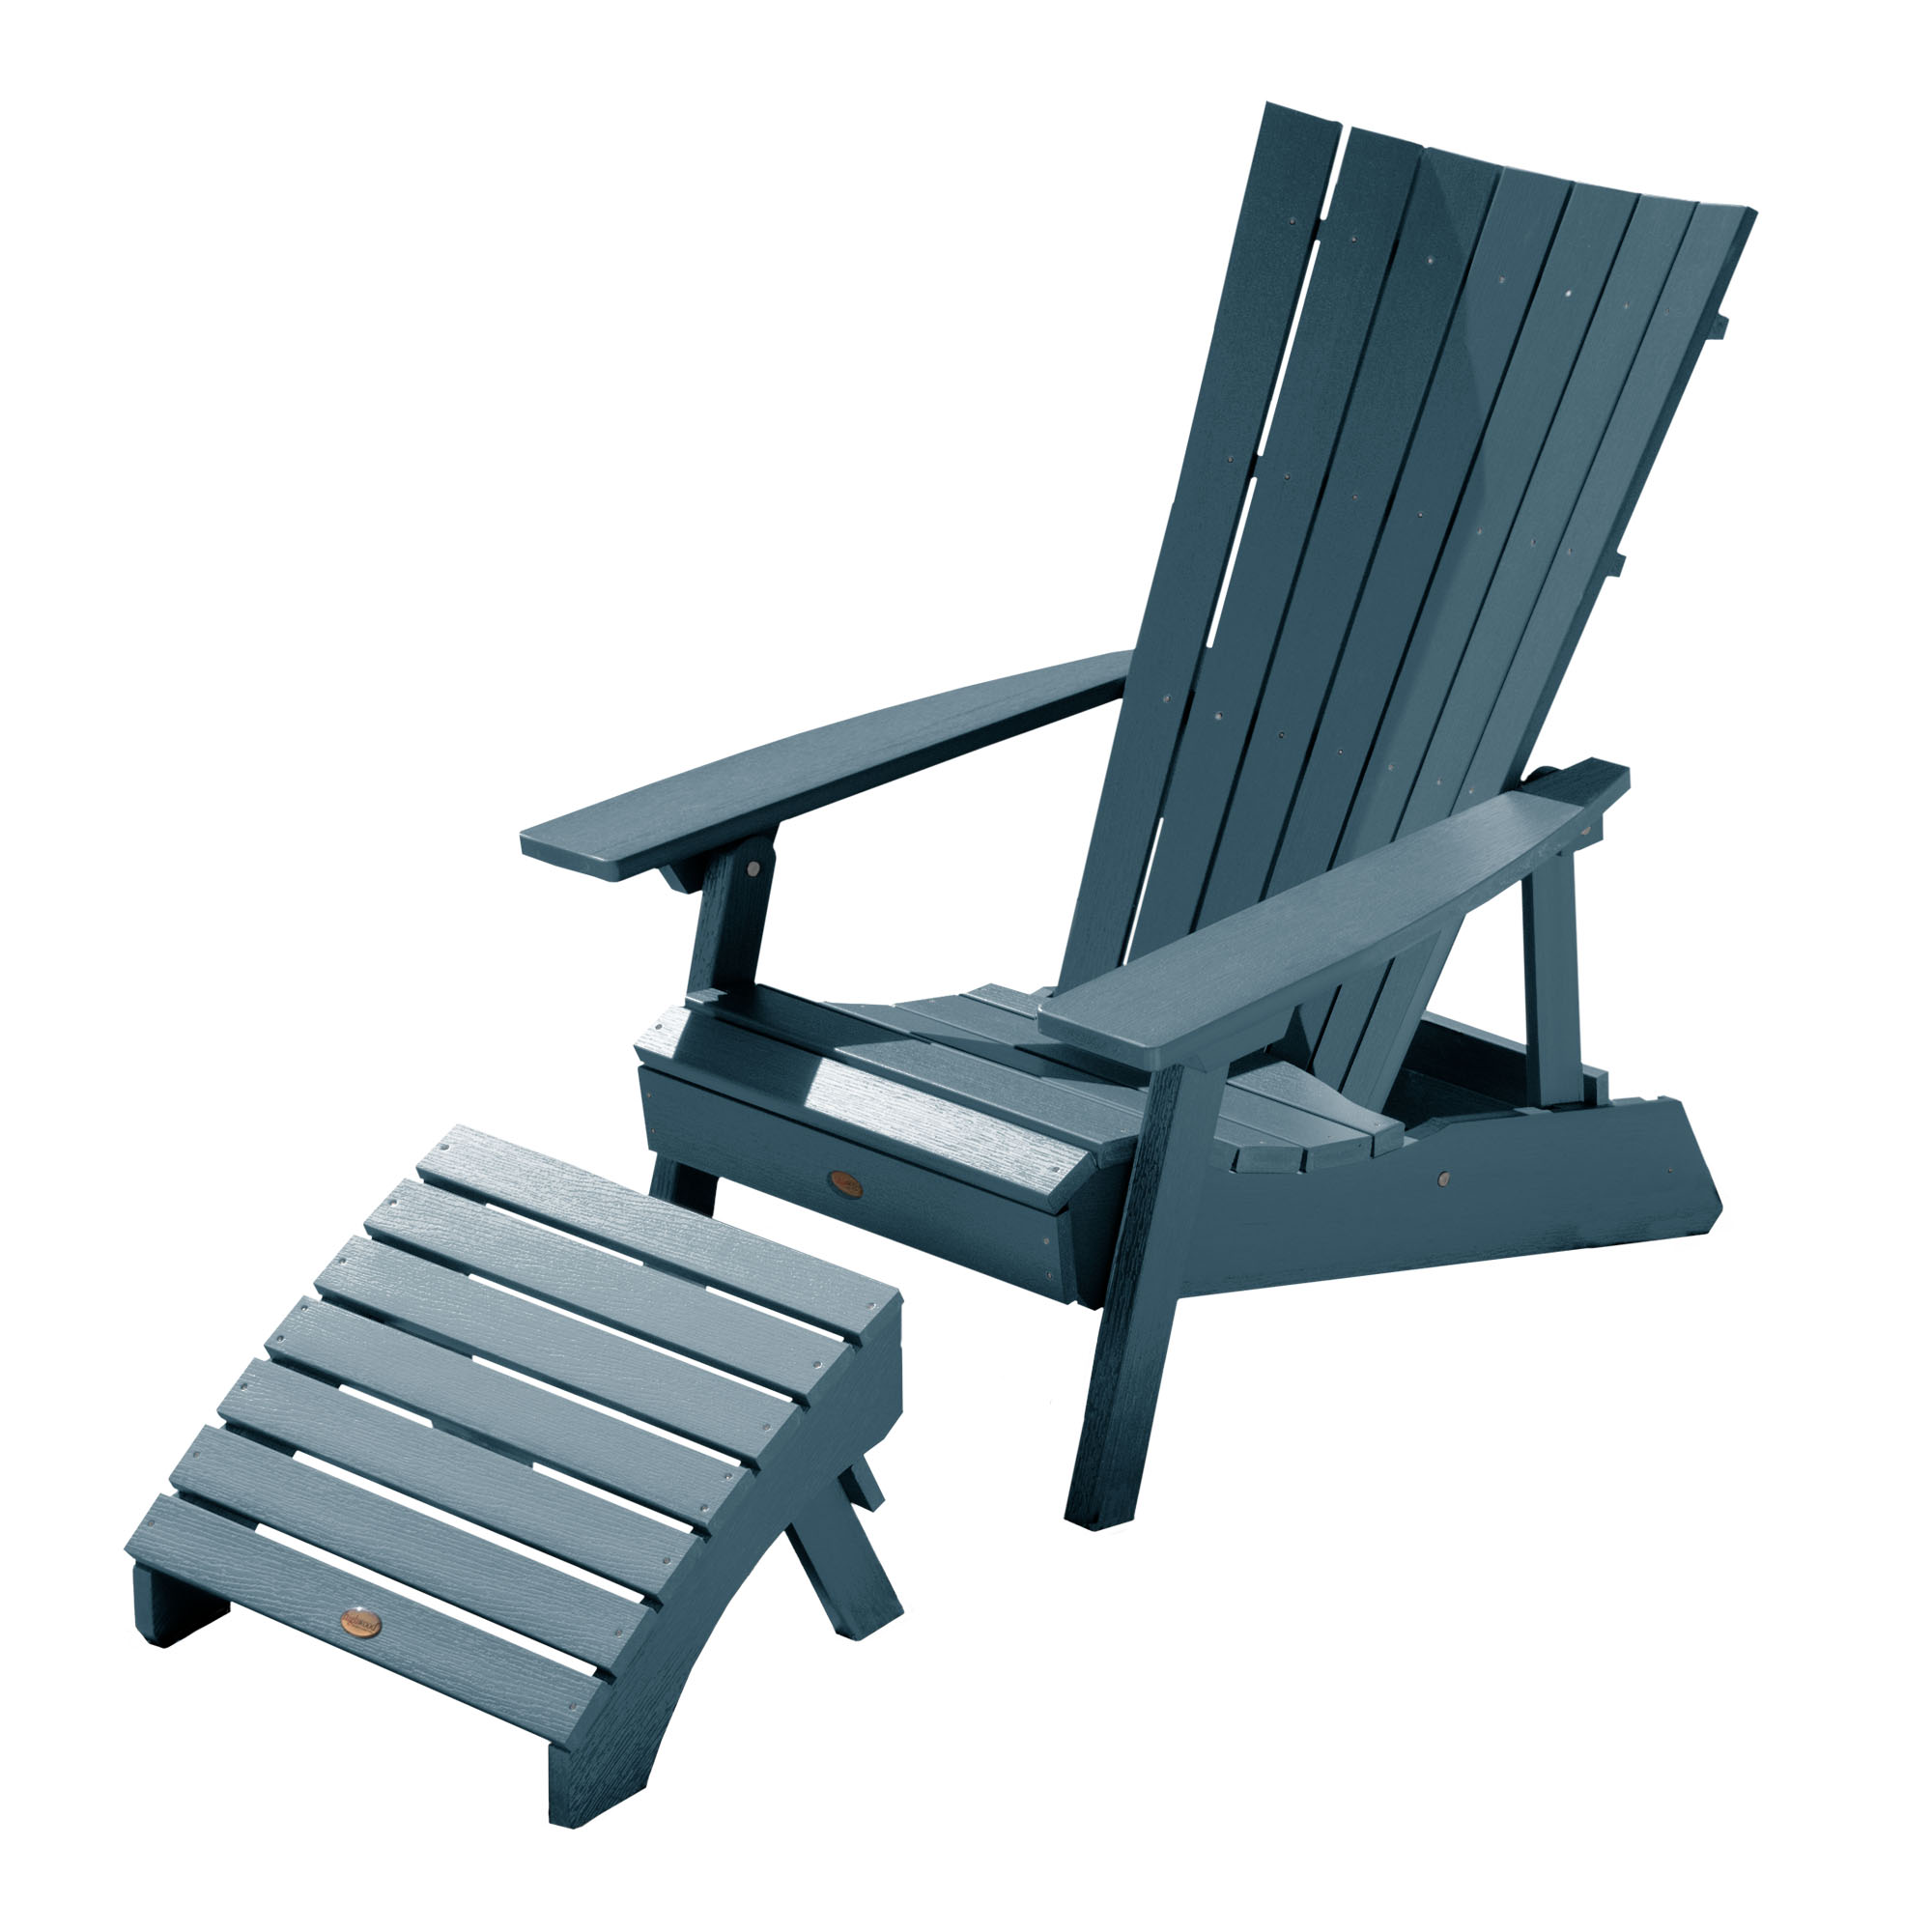 Highwood Manhattan Beach Adirondack Chair with Folding Ottoman - image 1 of 6